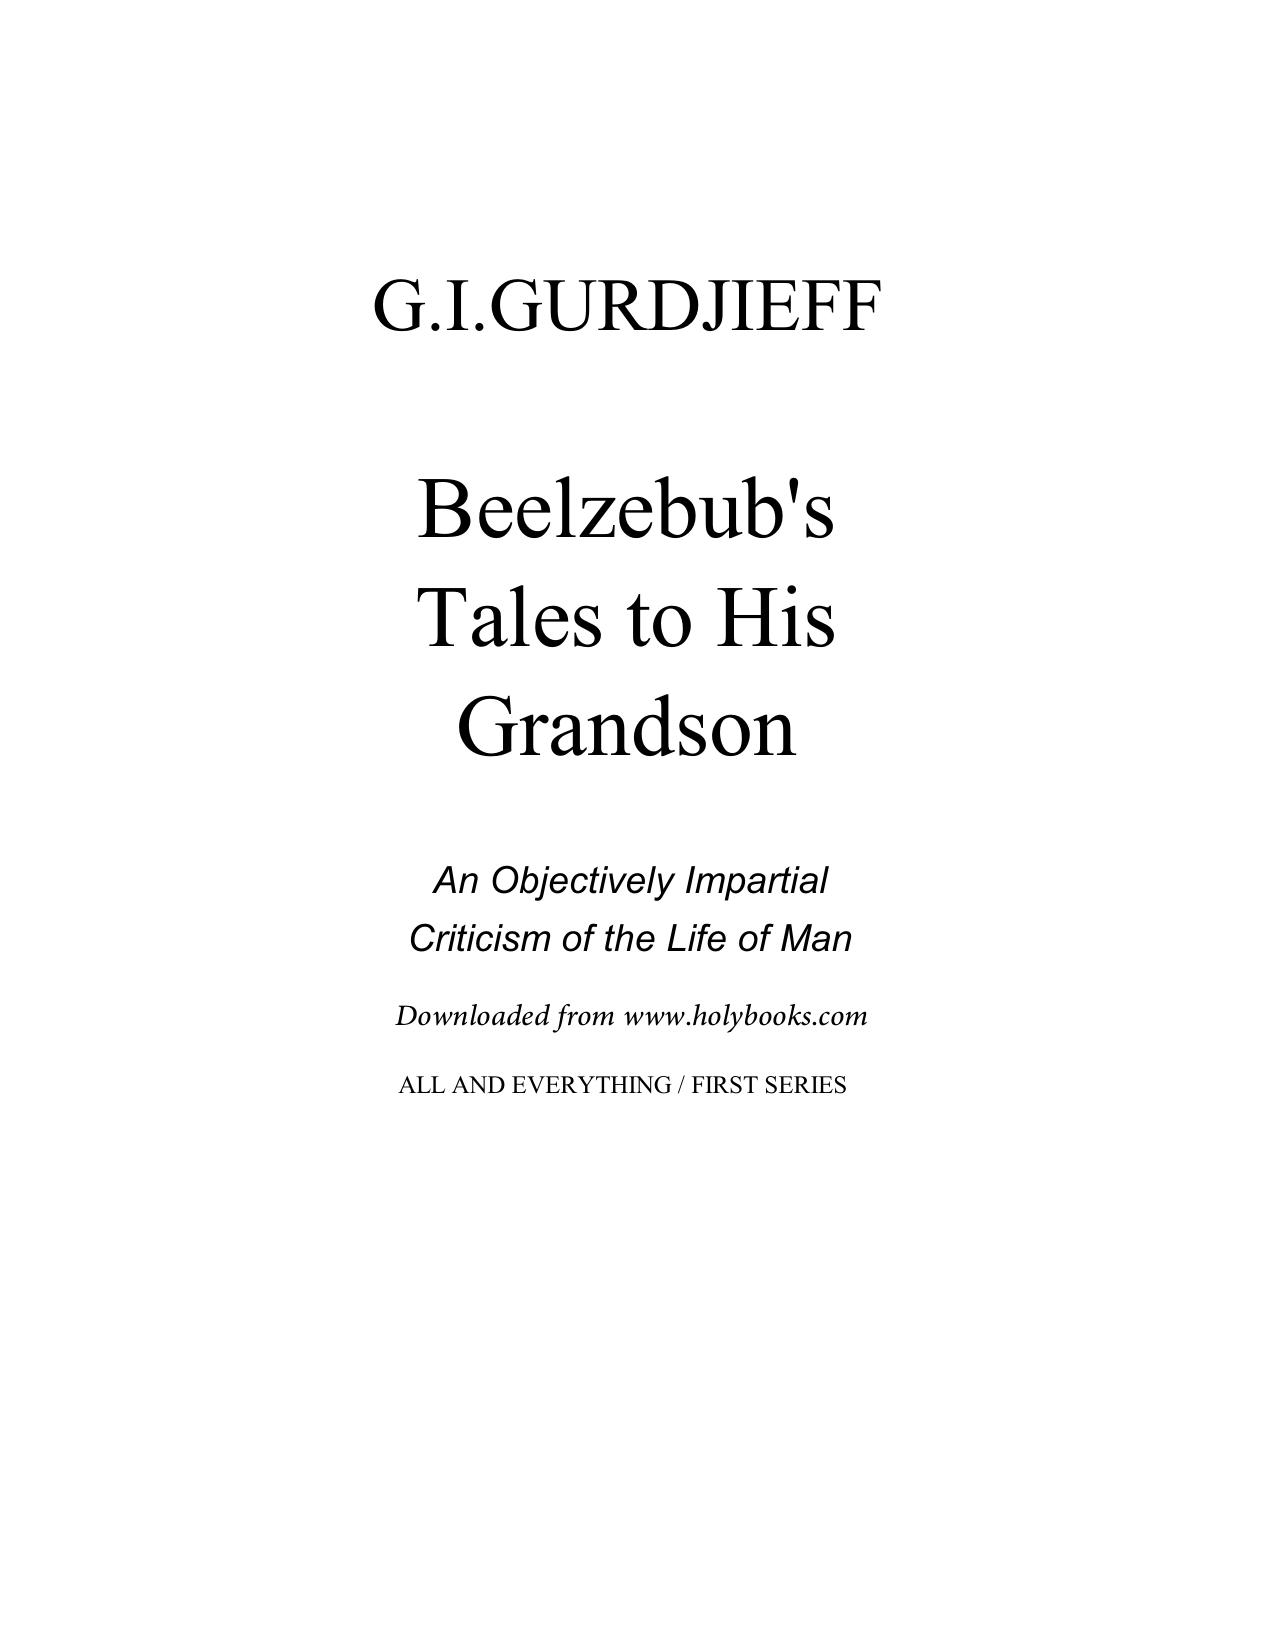 Beelzebub's Tales to His Grandson - All Three Books